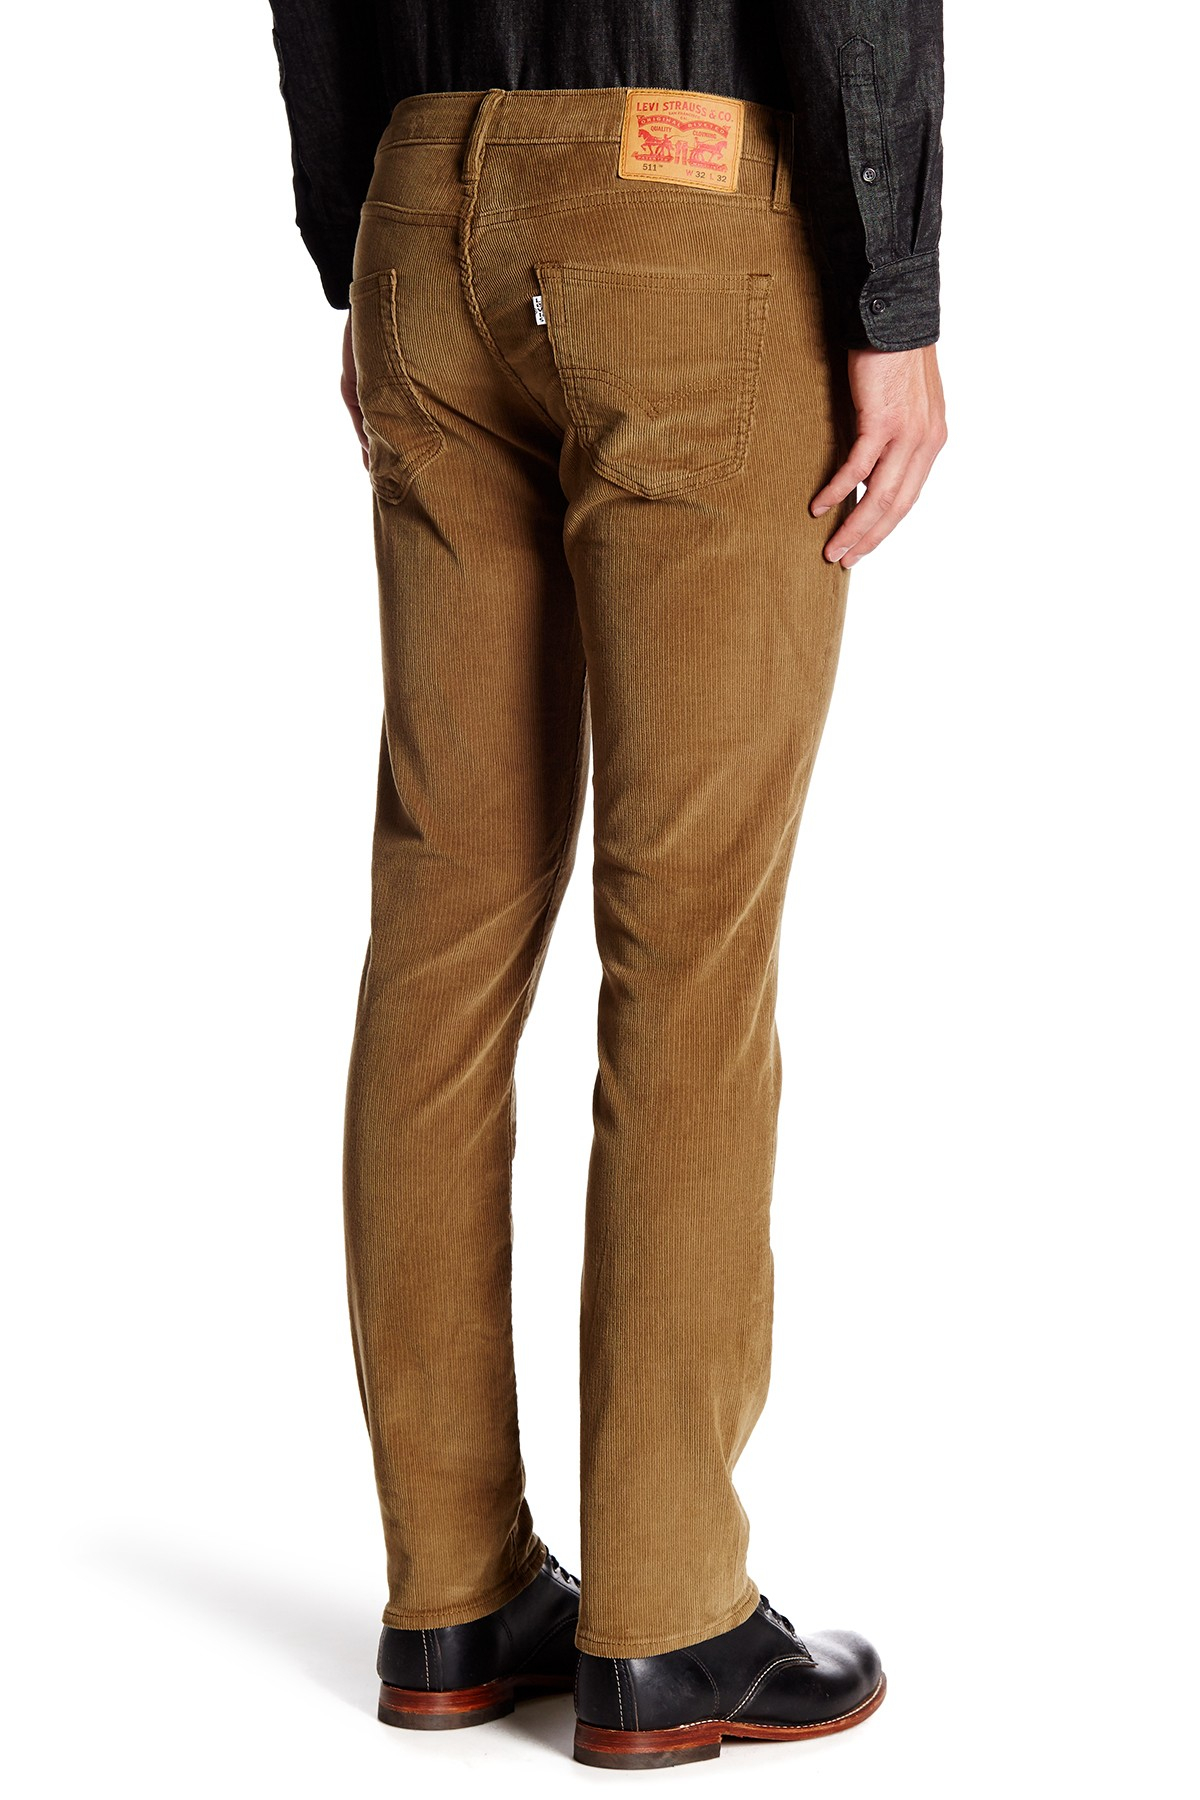 Lyst - Levi'S 511 Slim Fit Cougar Rinsed Corduroy Pant in Brown for Men